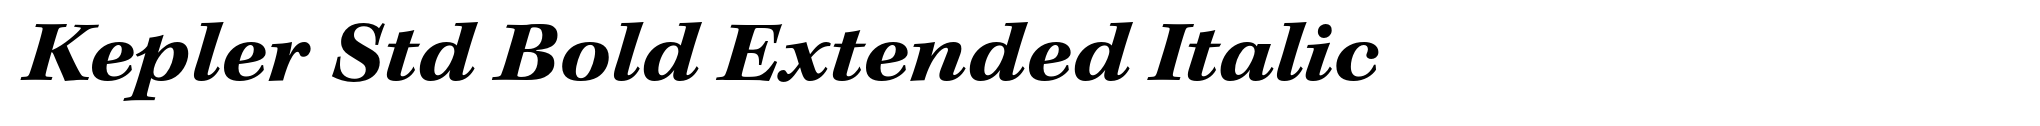 Kepler Std Bold Extended Italic image